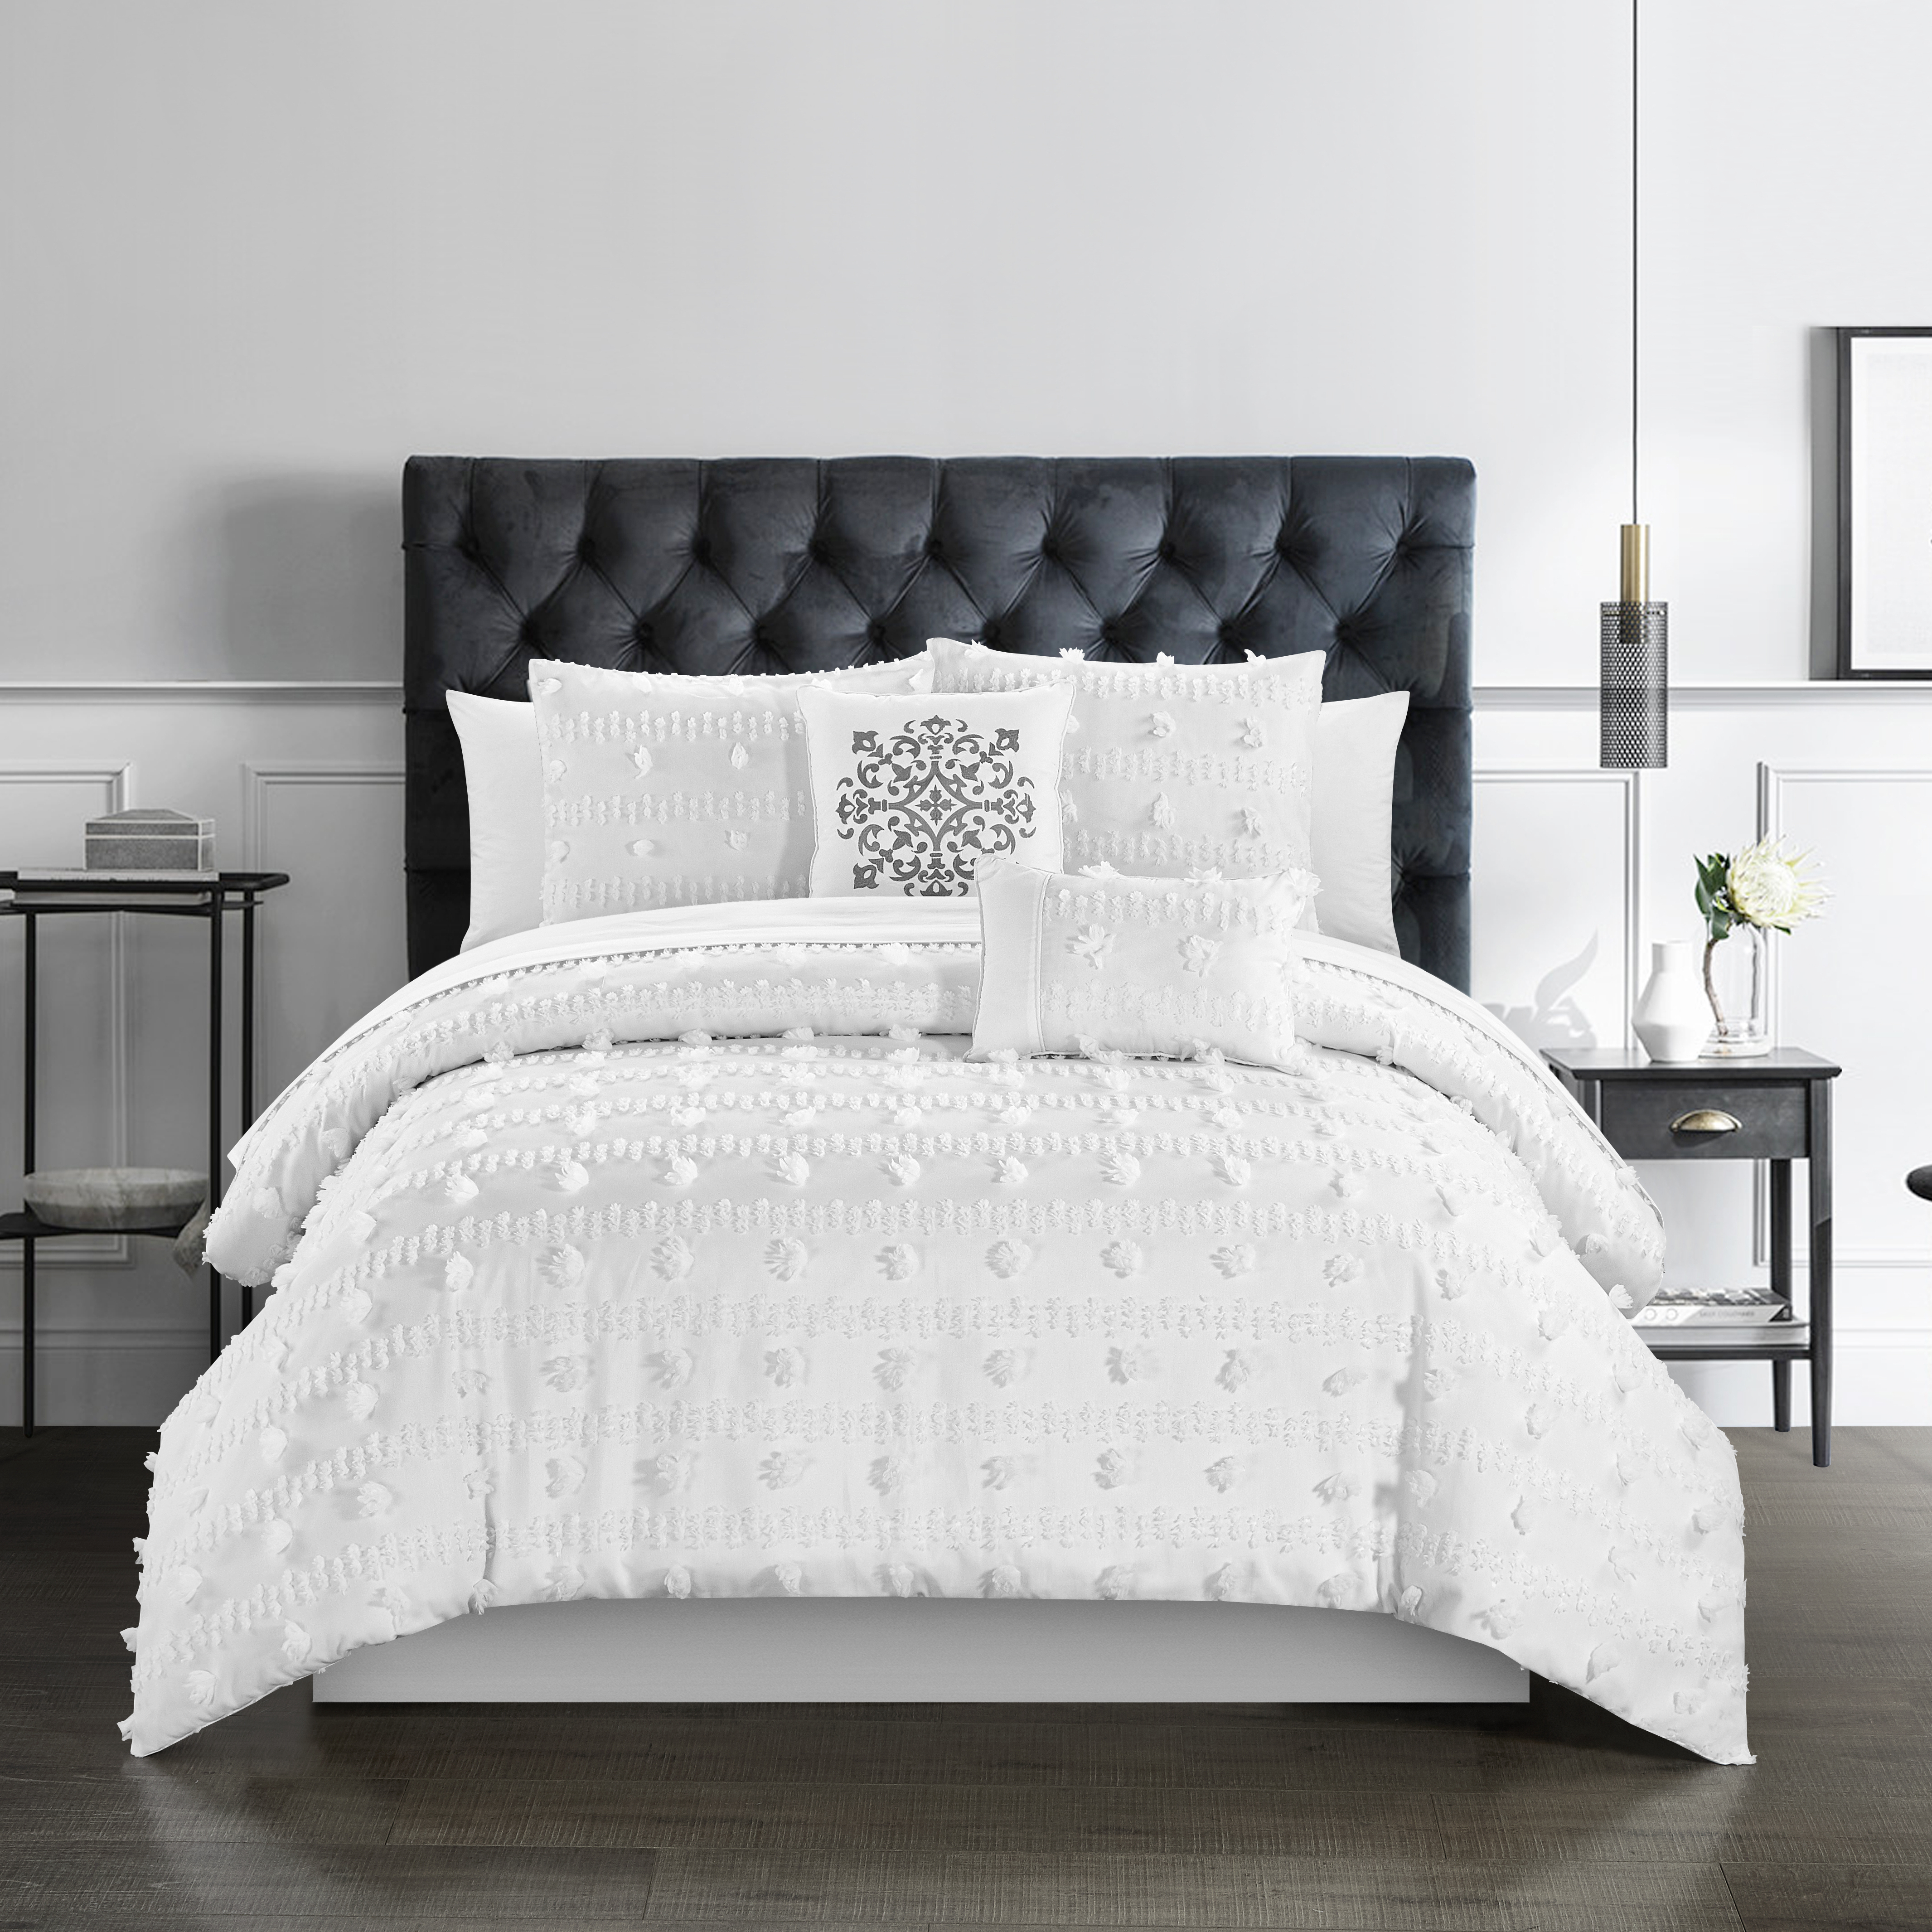 Ahtisa 5 Piece Comforter Set Jacquard Floral Applique Design Bedding - Blush, Queen